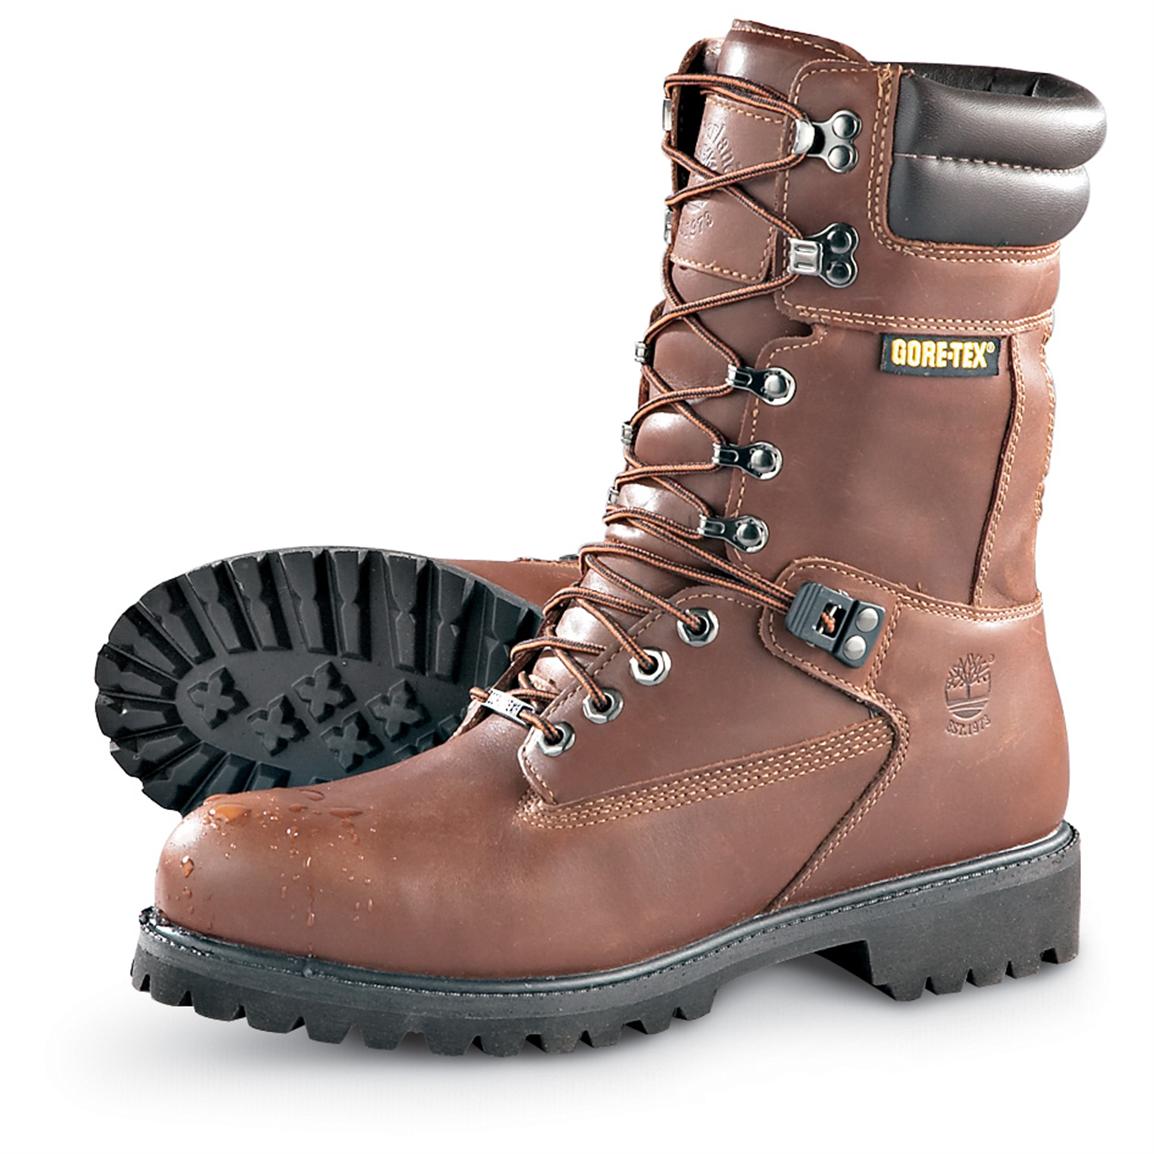 Men's 10" Timberland® GORE - TEX® Hunting Boots, Tan ...